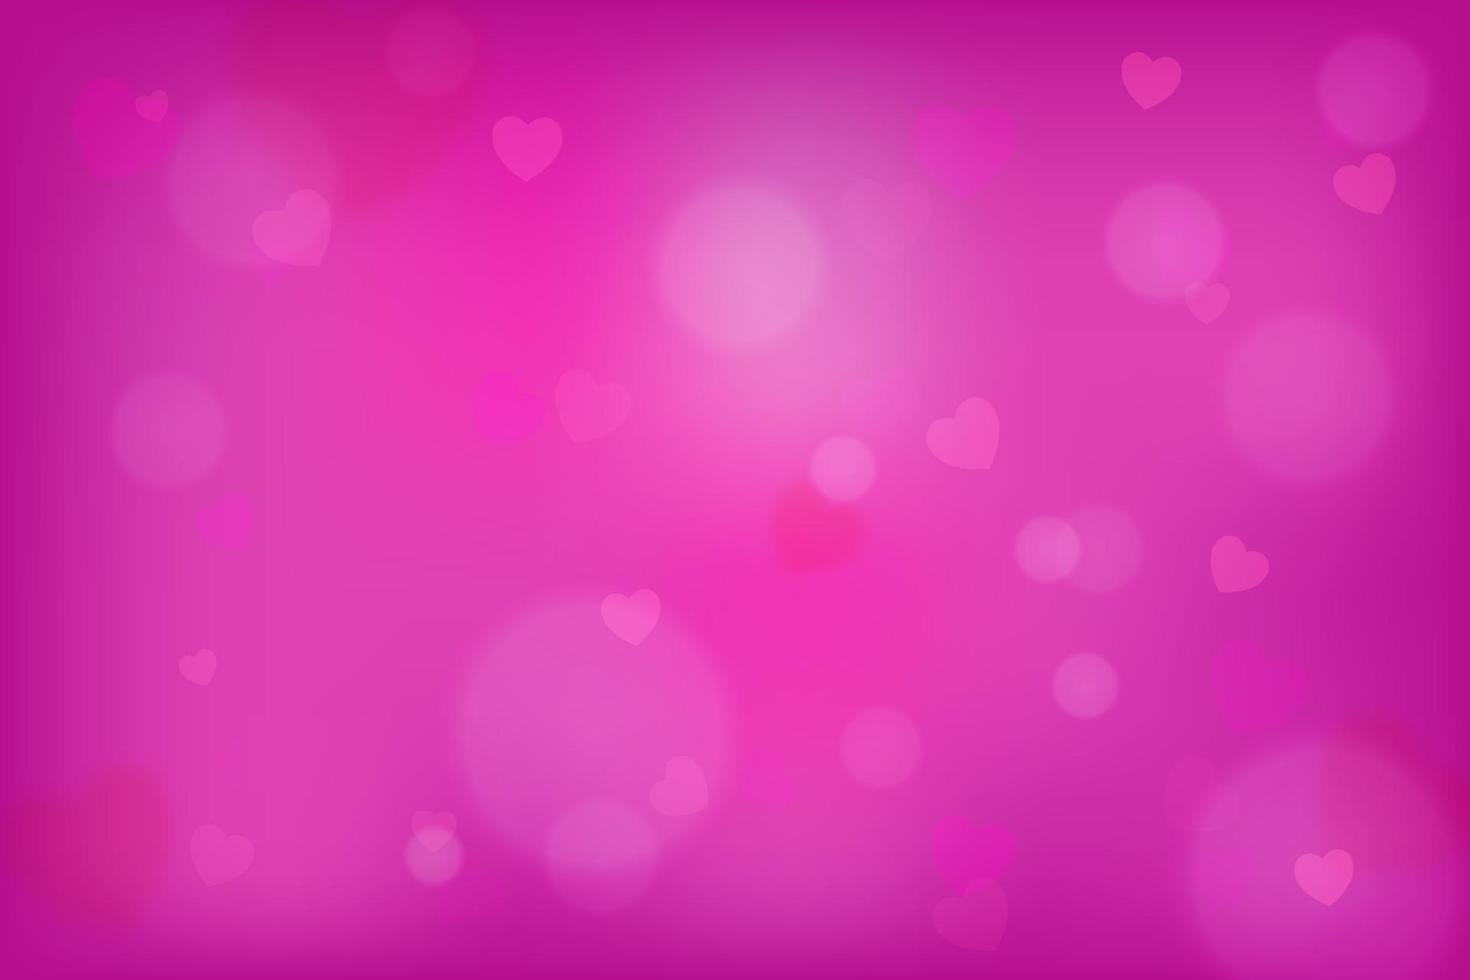 Blurred valentines day background concept. Romantic quote postcard, card, invitation, banner template design vector